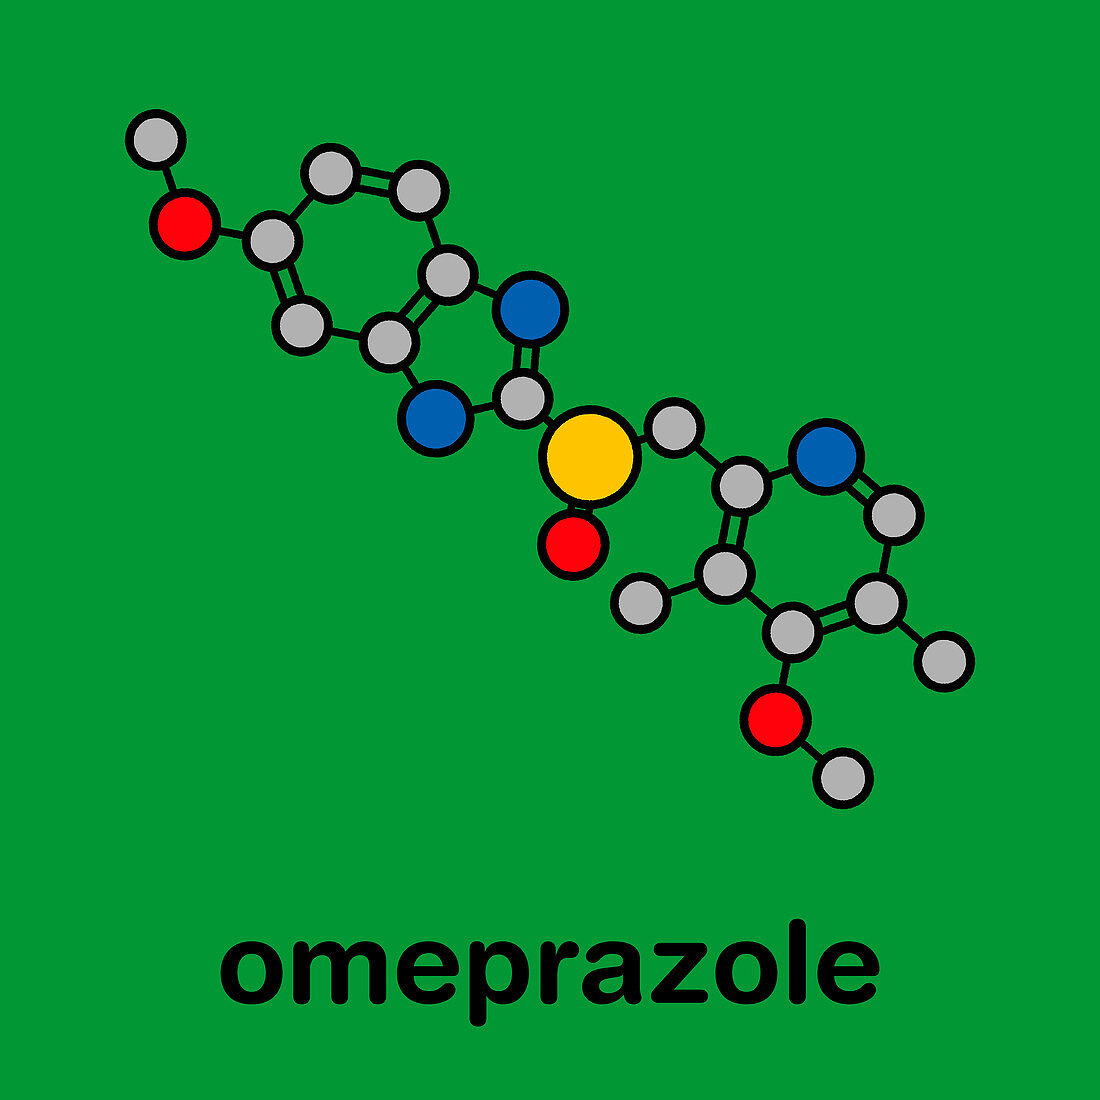 Omeprazole dyspepsia and peptic ulcer drug, molecular model